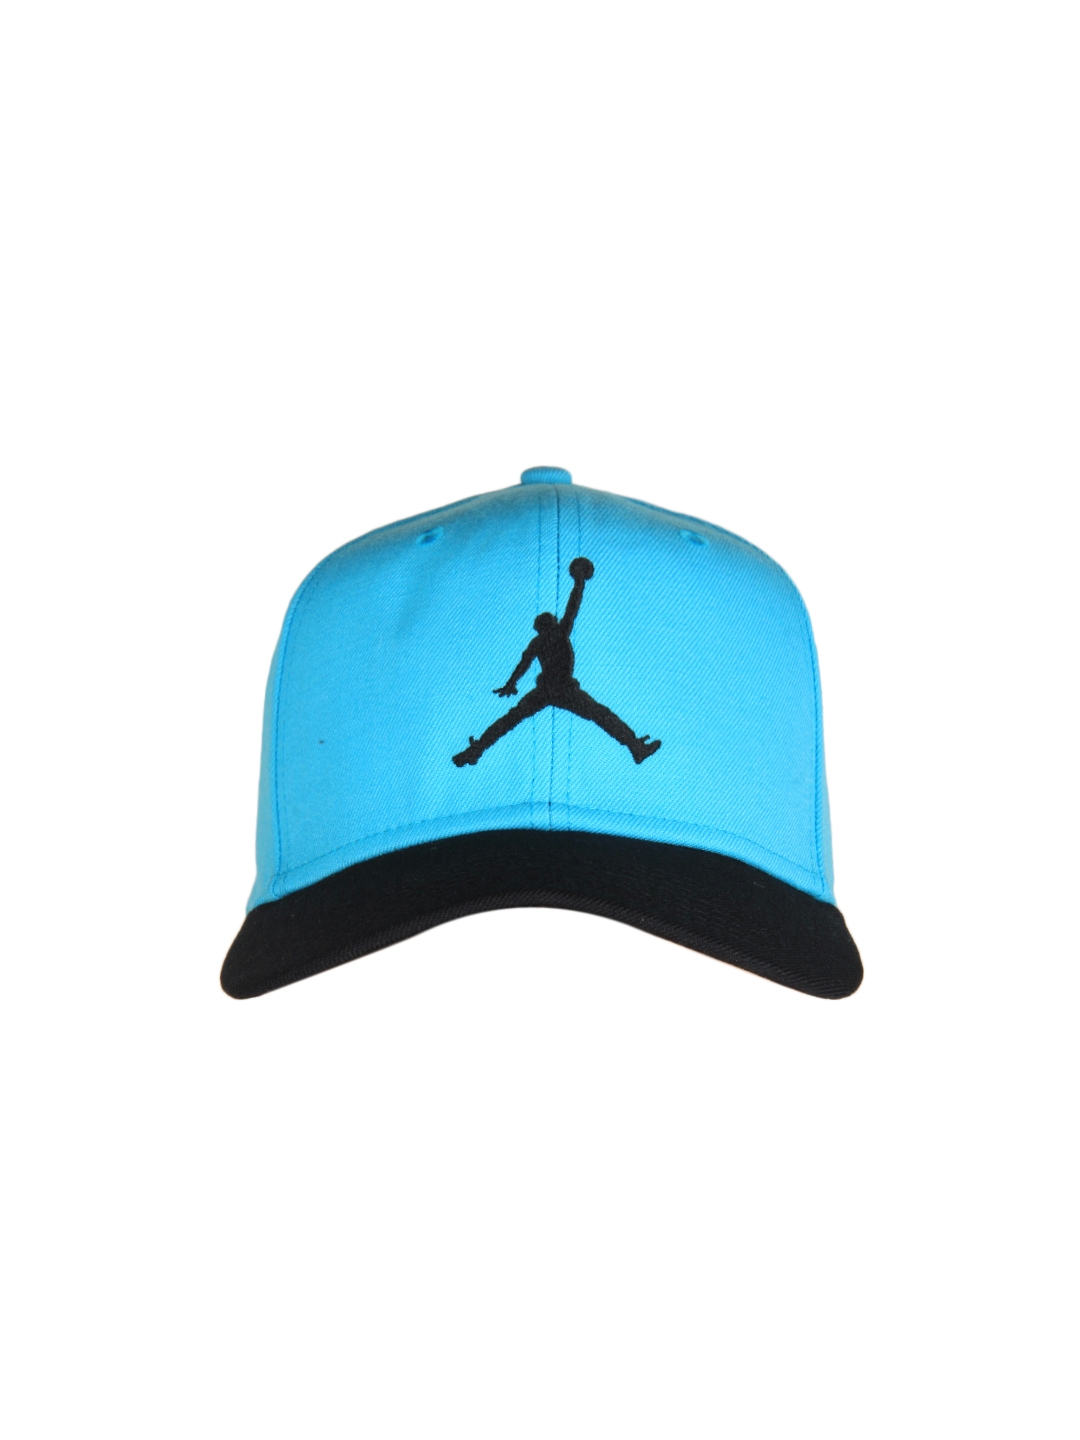 blue and black jordan hat